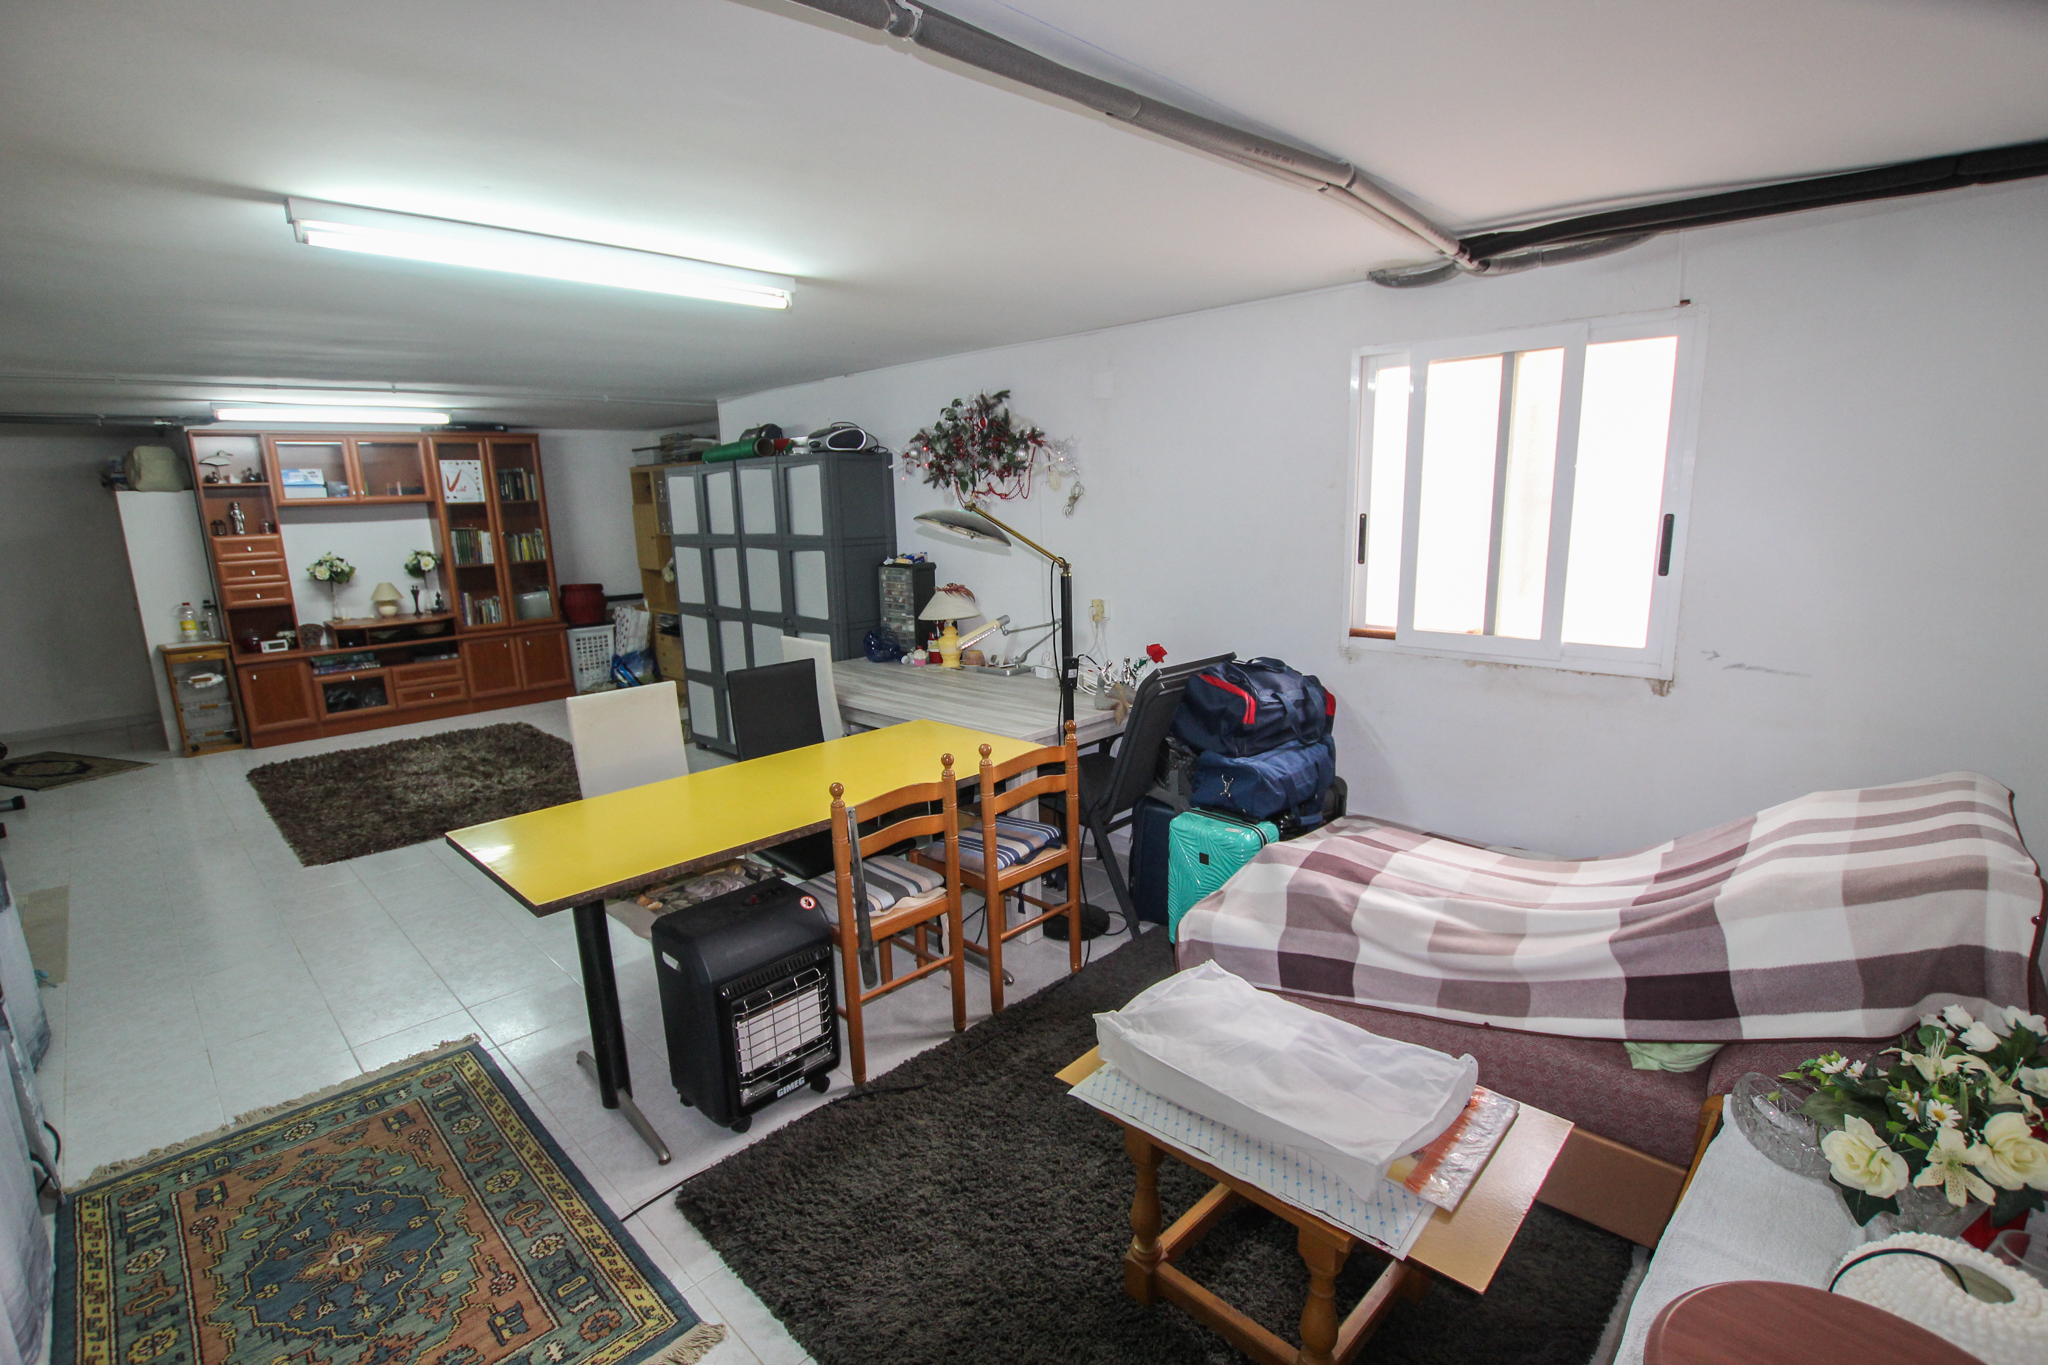 La Nucia: Renovated 3 bedroom villa